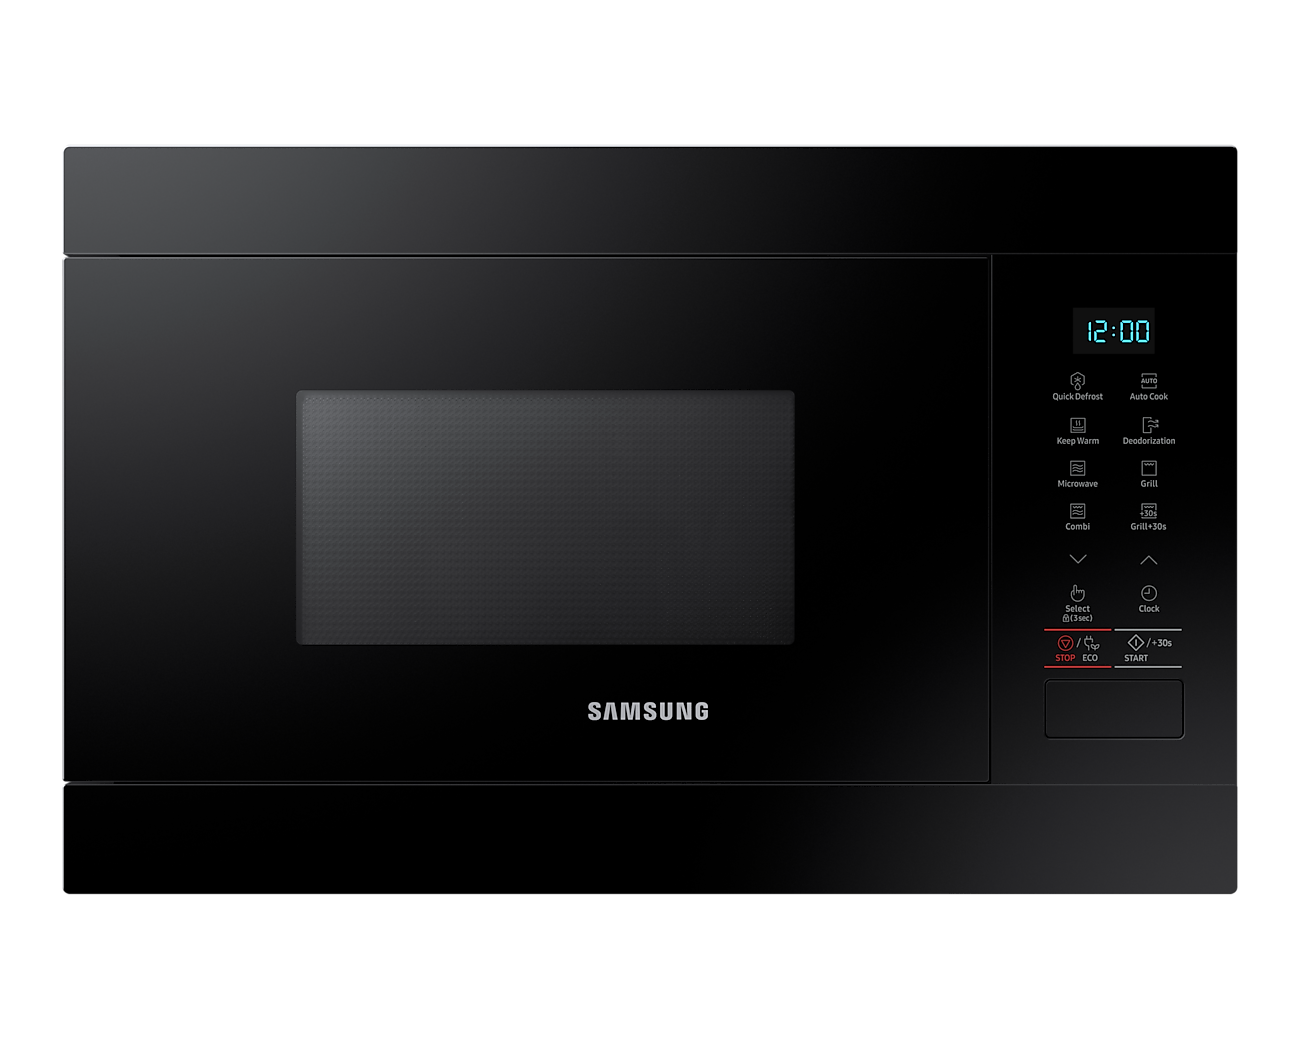 Samsung MG22M8054AK 22 Lt Siyah Ankastre Mikrodalga Fırın